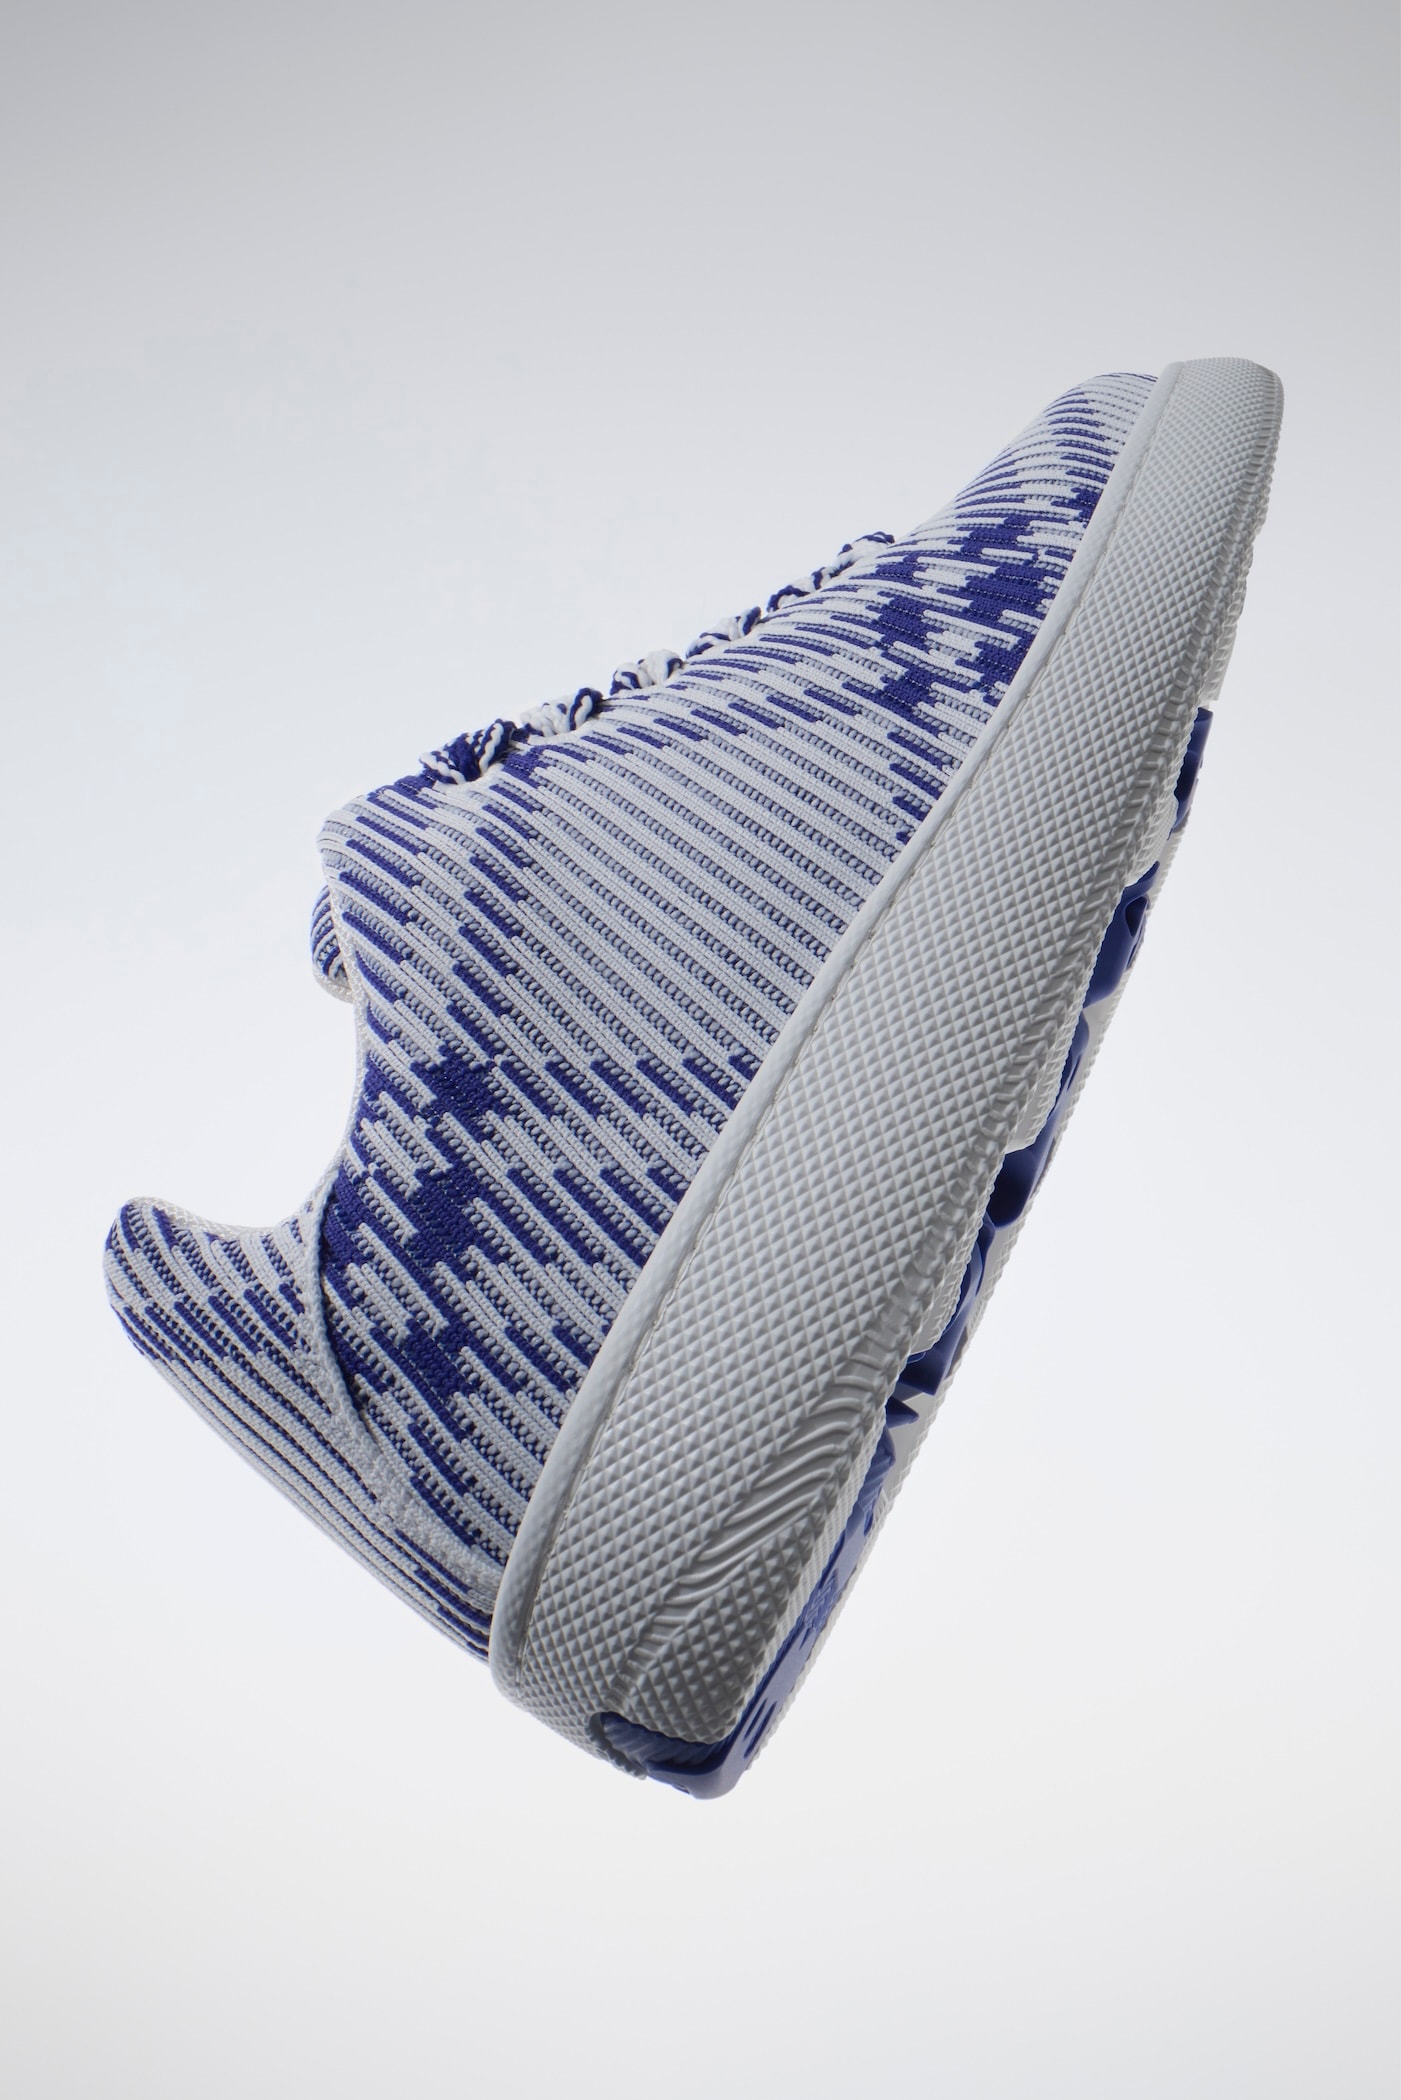 Burberry 释出全新 Box Sneakers 运动鞋系列